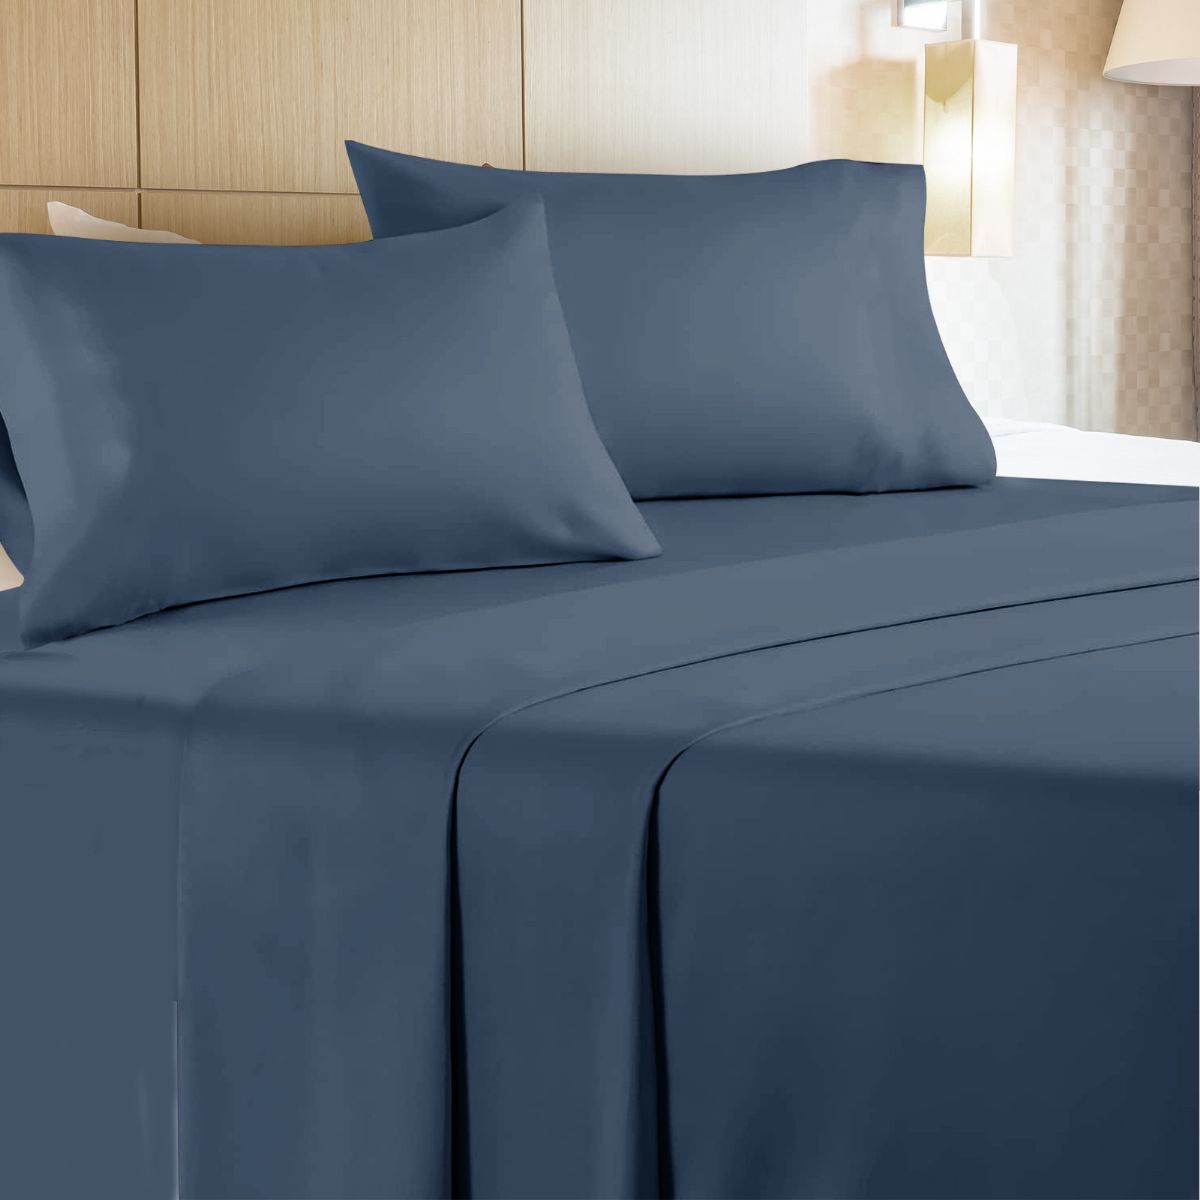 6 Wholesale 4 Piece Microfiber Bed Sheet Set Queen Size In Navy